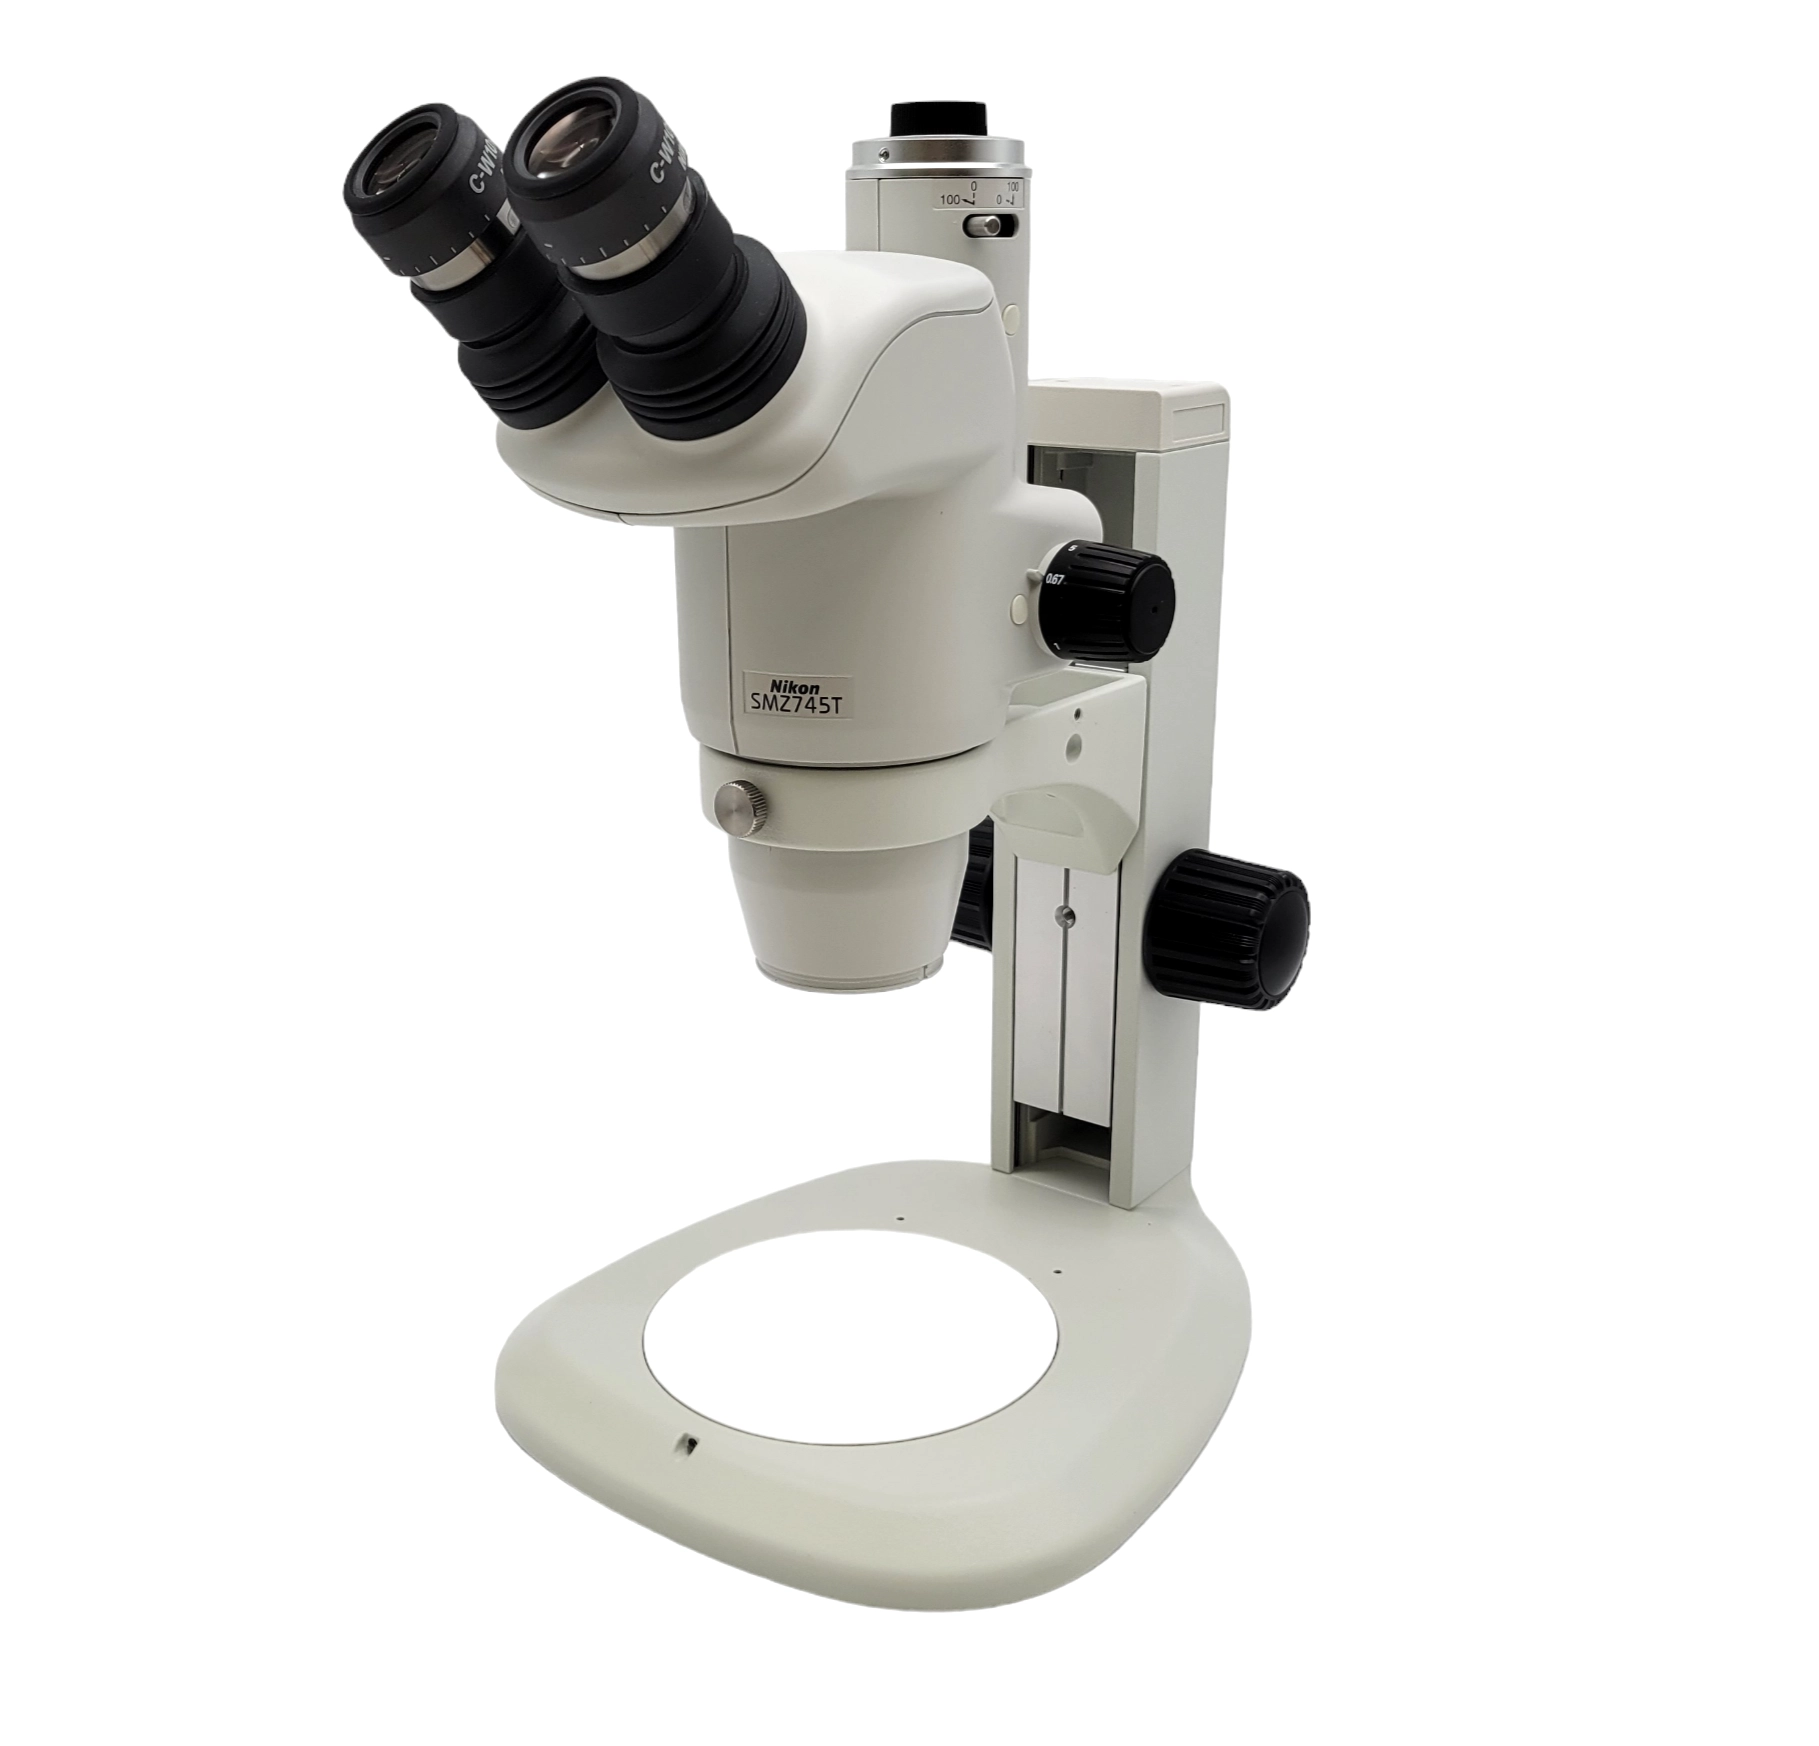 Nikon Stereo Microscope Trinocular SMZ745T with Stand